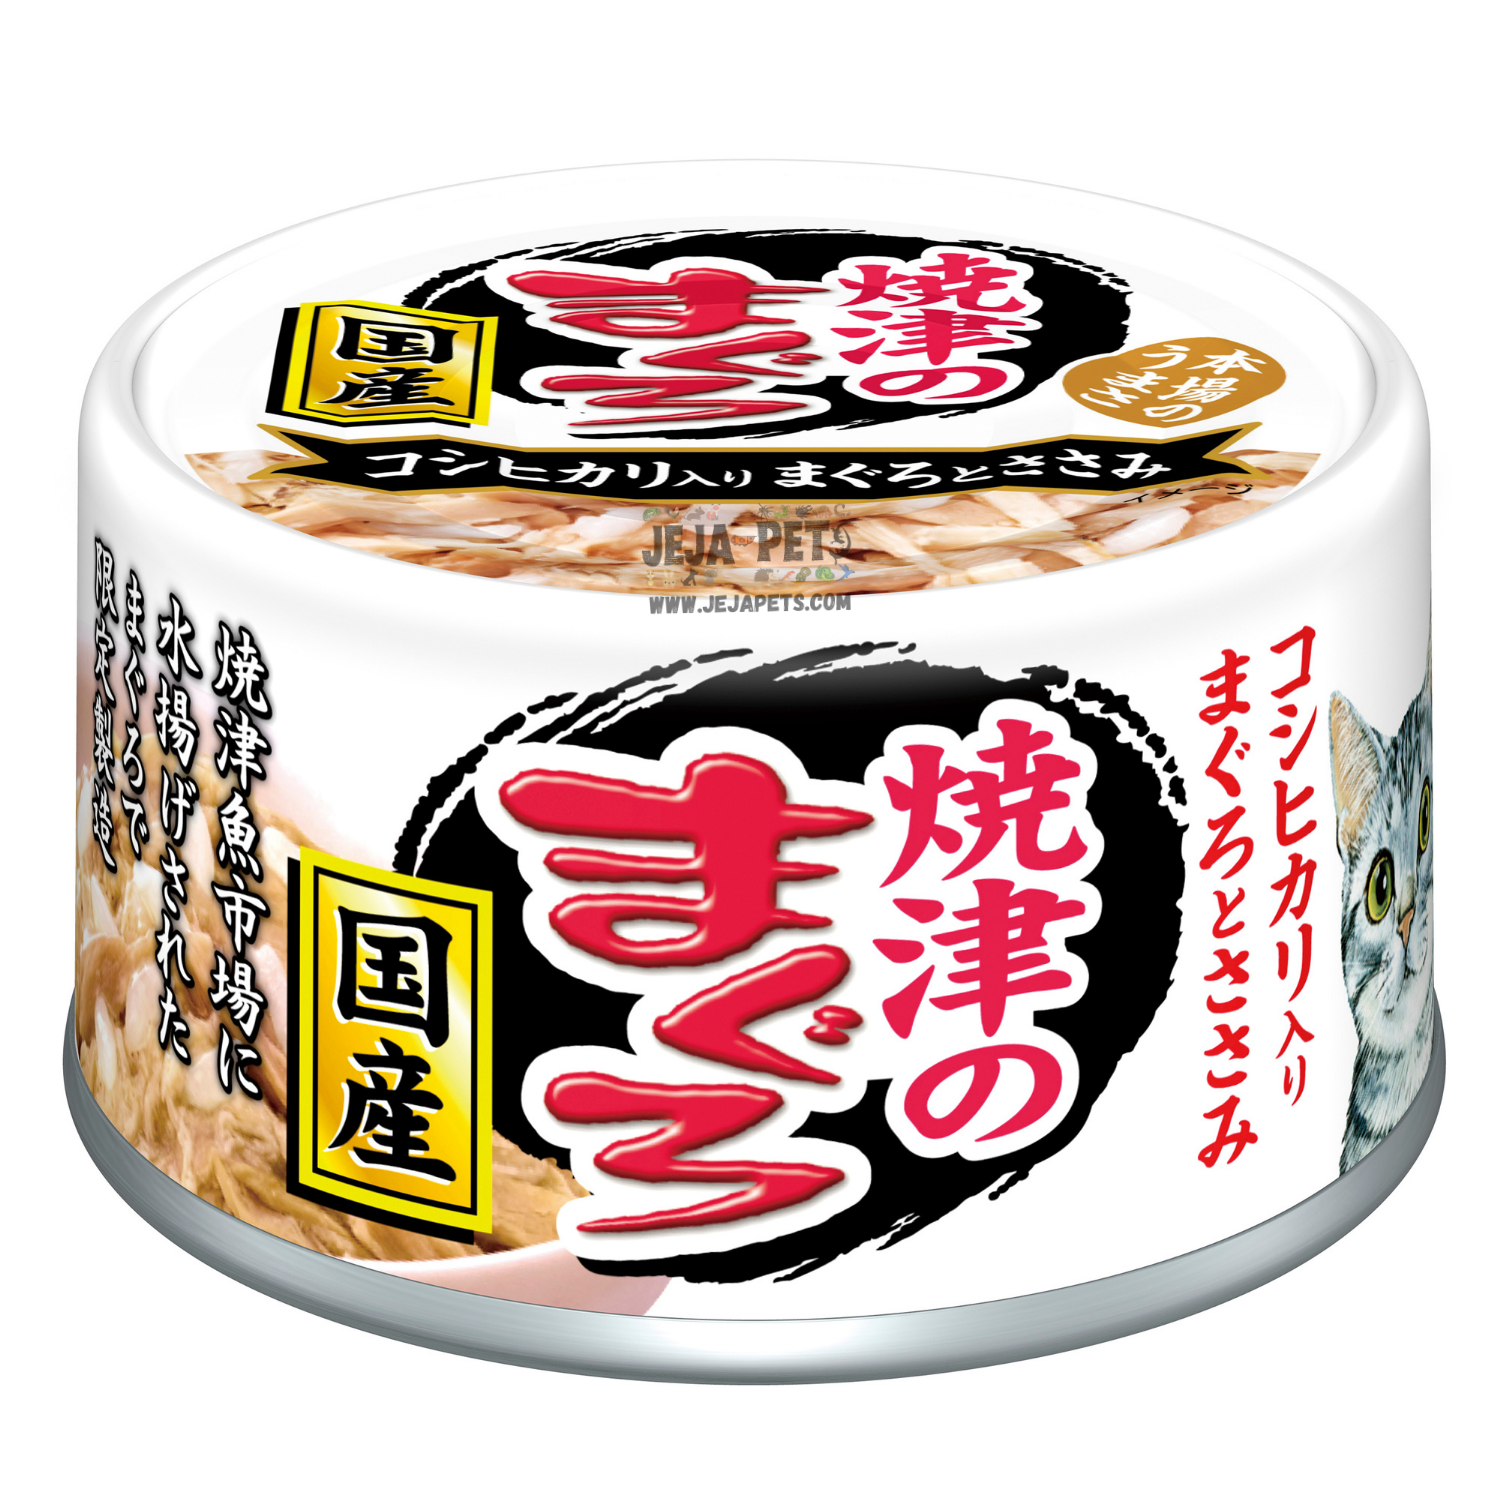 Aixia Yaizu No Maguro Tuna & Chicken with Koshihikari Rice Cat Canned Food - 70g